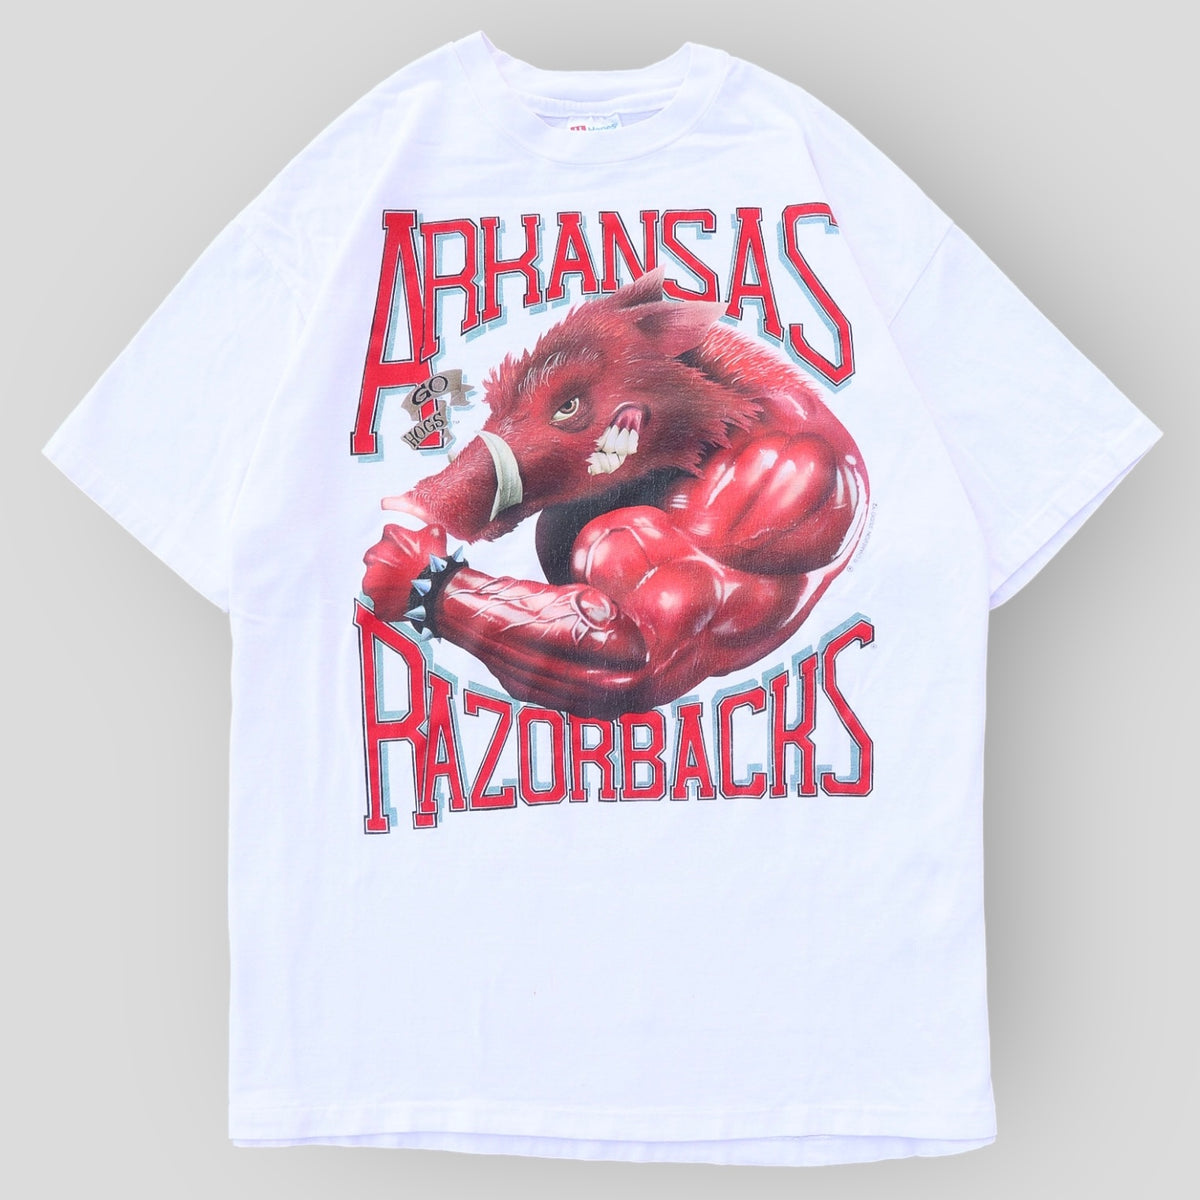 1994 Rare Razorbacks National Champion Mad Hog Vintage T-Shirt